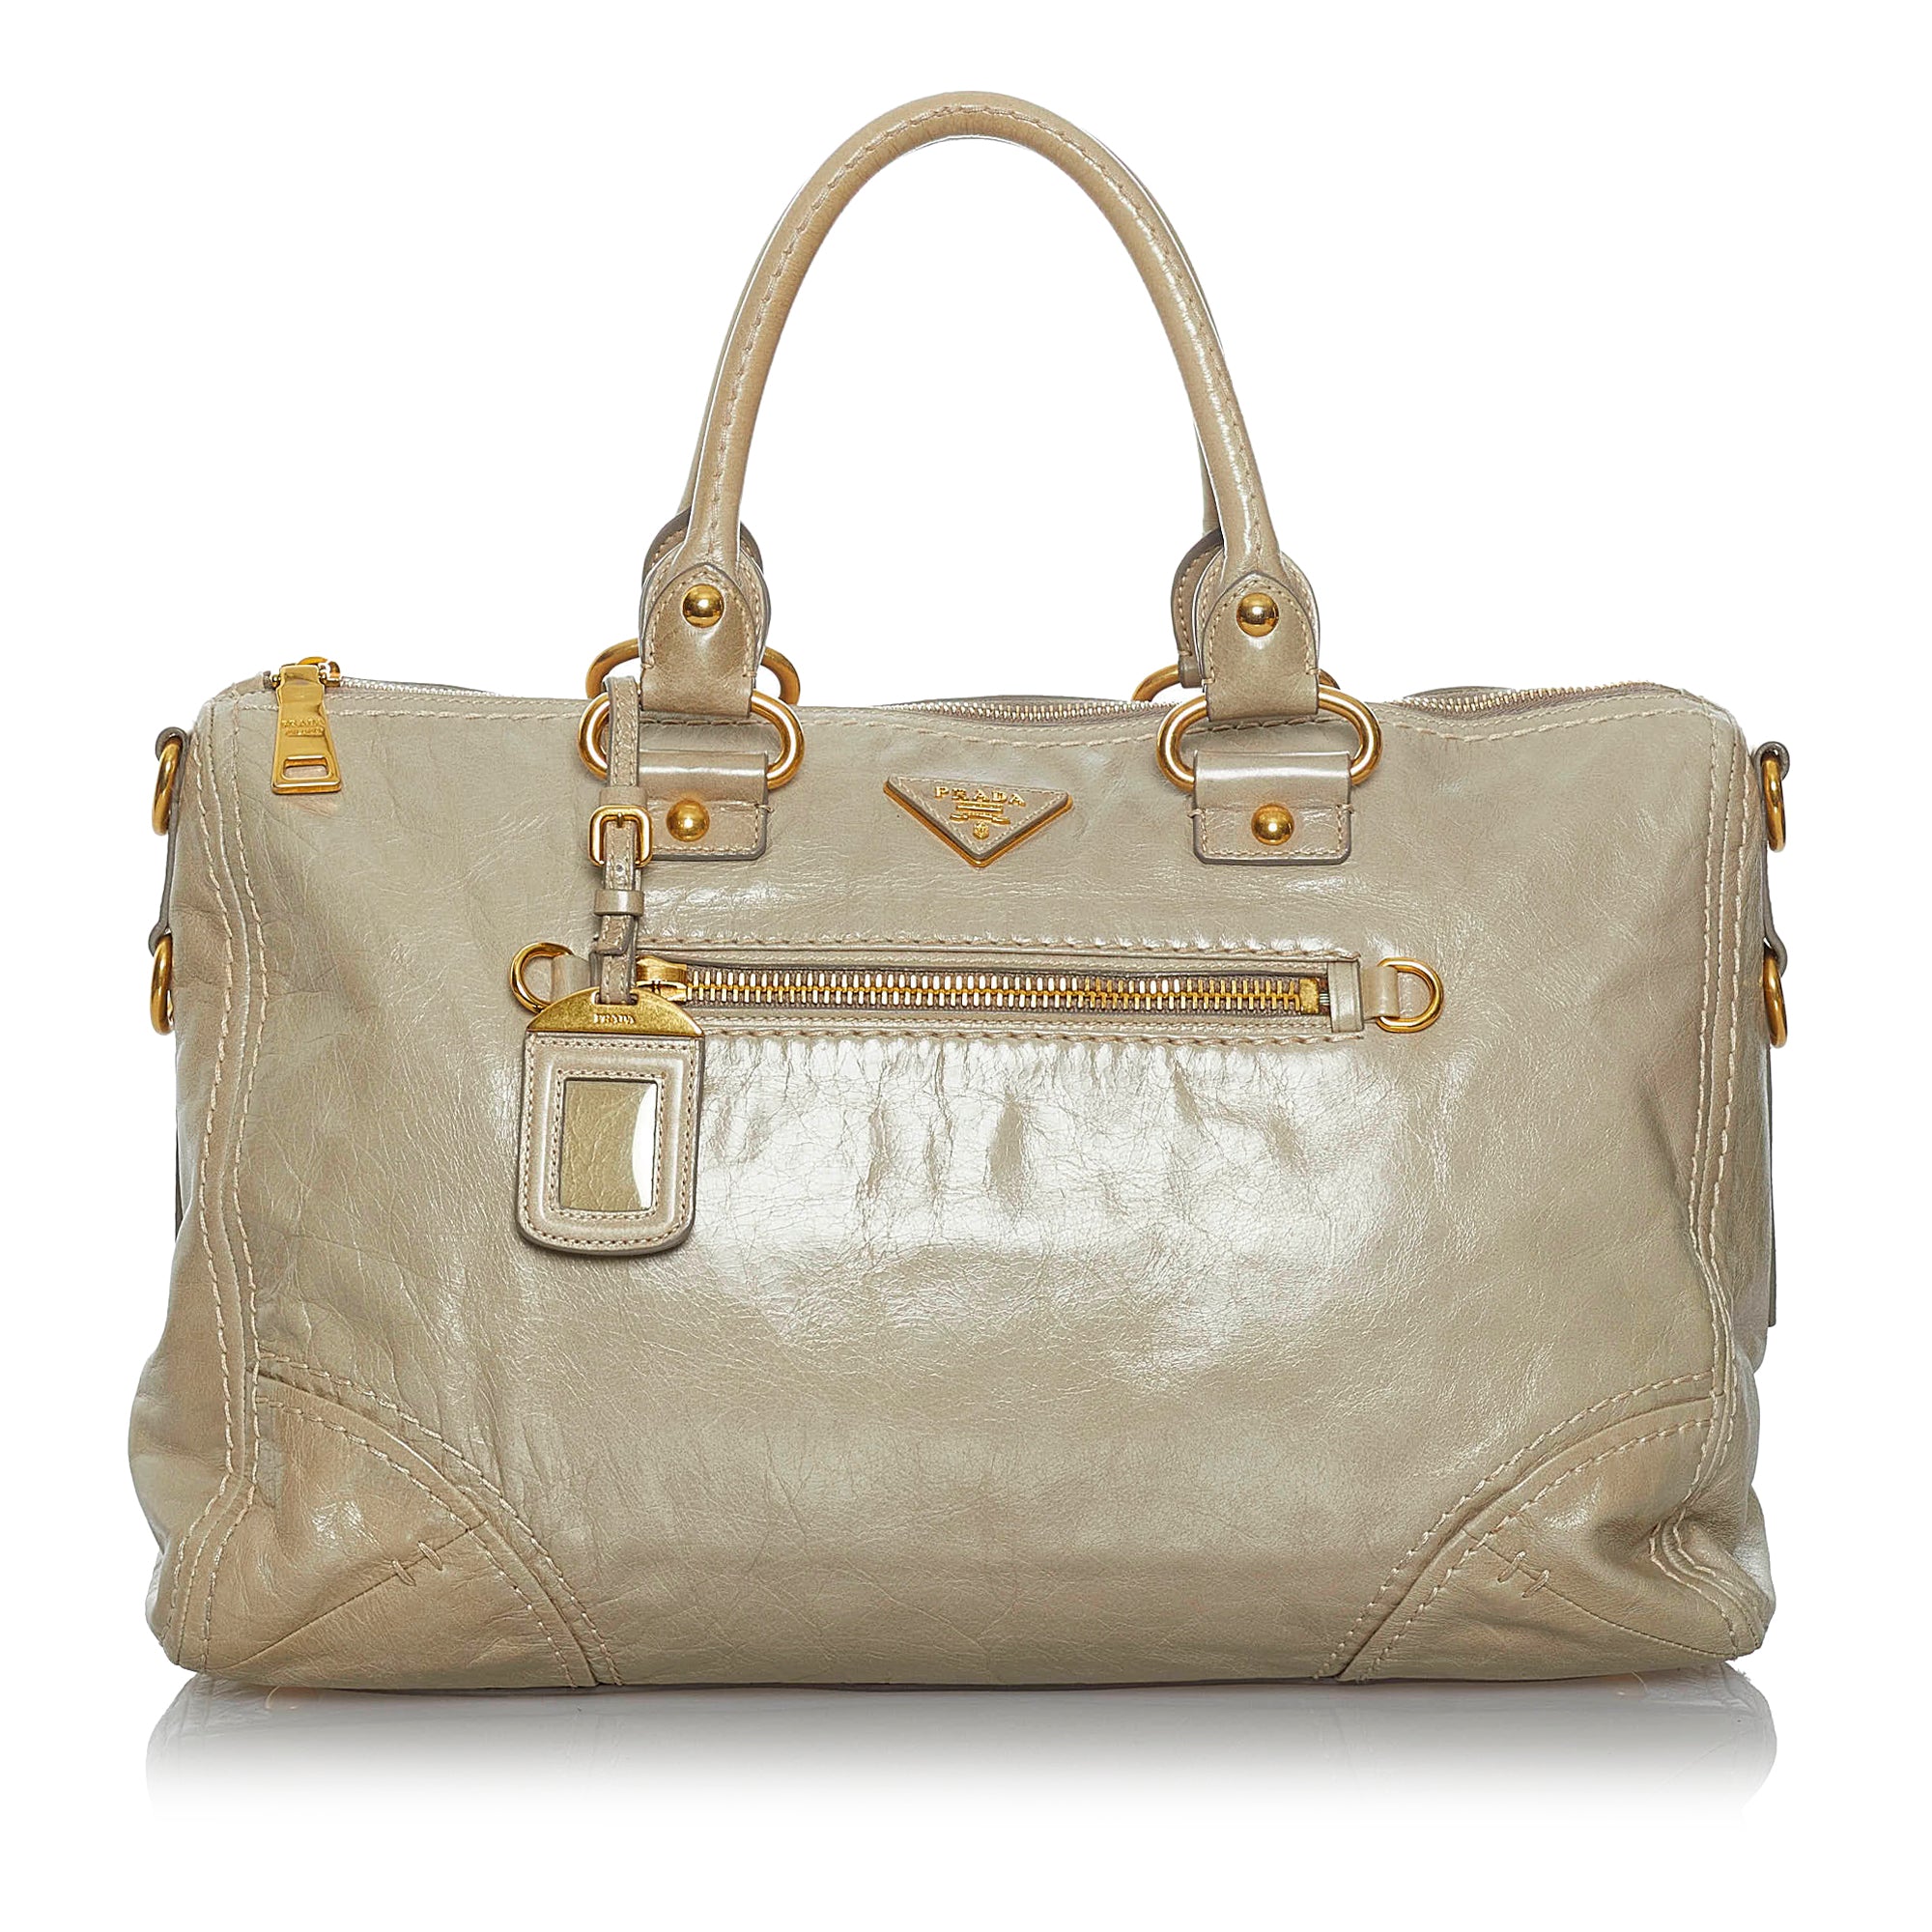 Prada Vitello Shine Leather Top Handle Bag on SALE